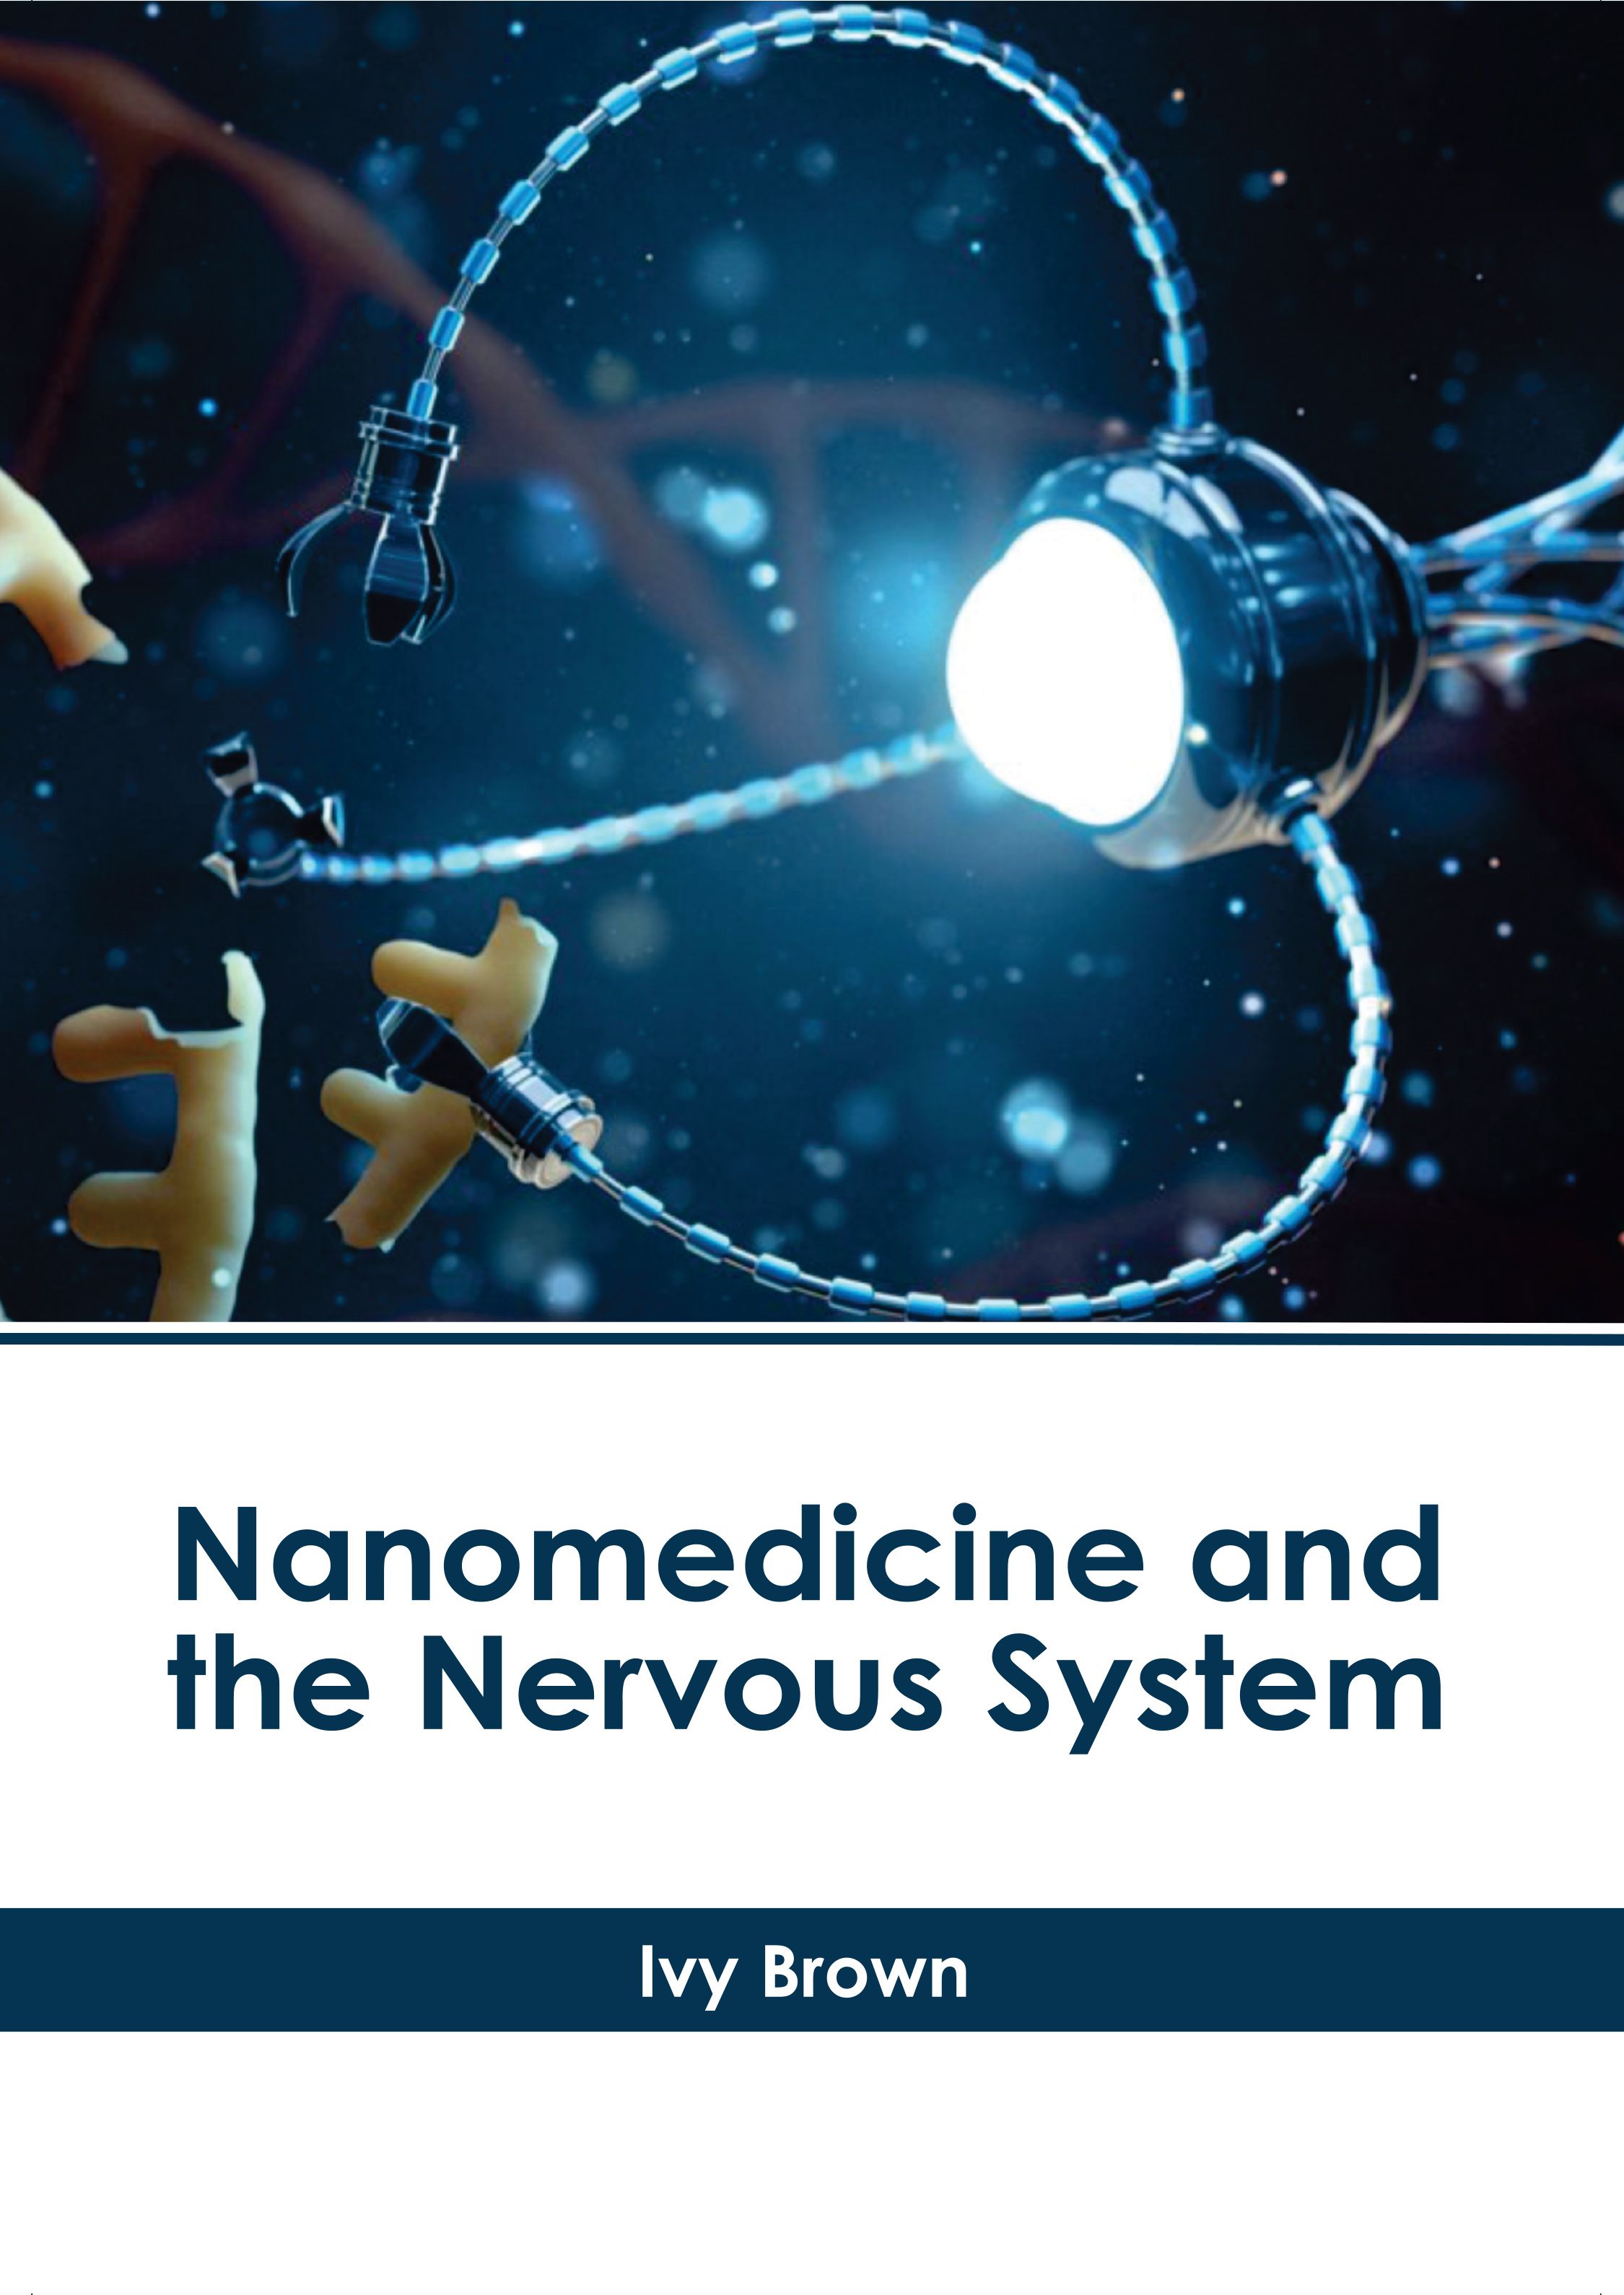 NANOMEDICINE AND THE NERVOUS SYSTEM